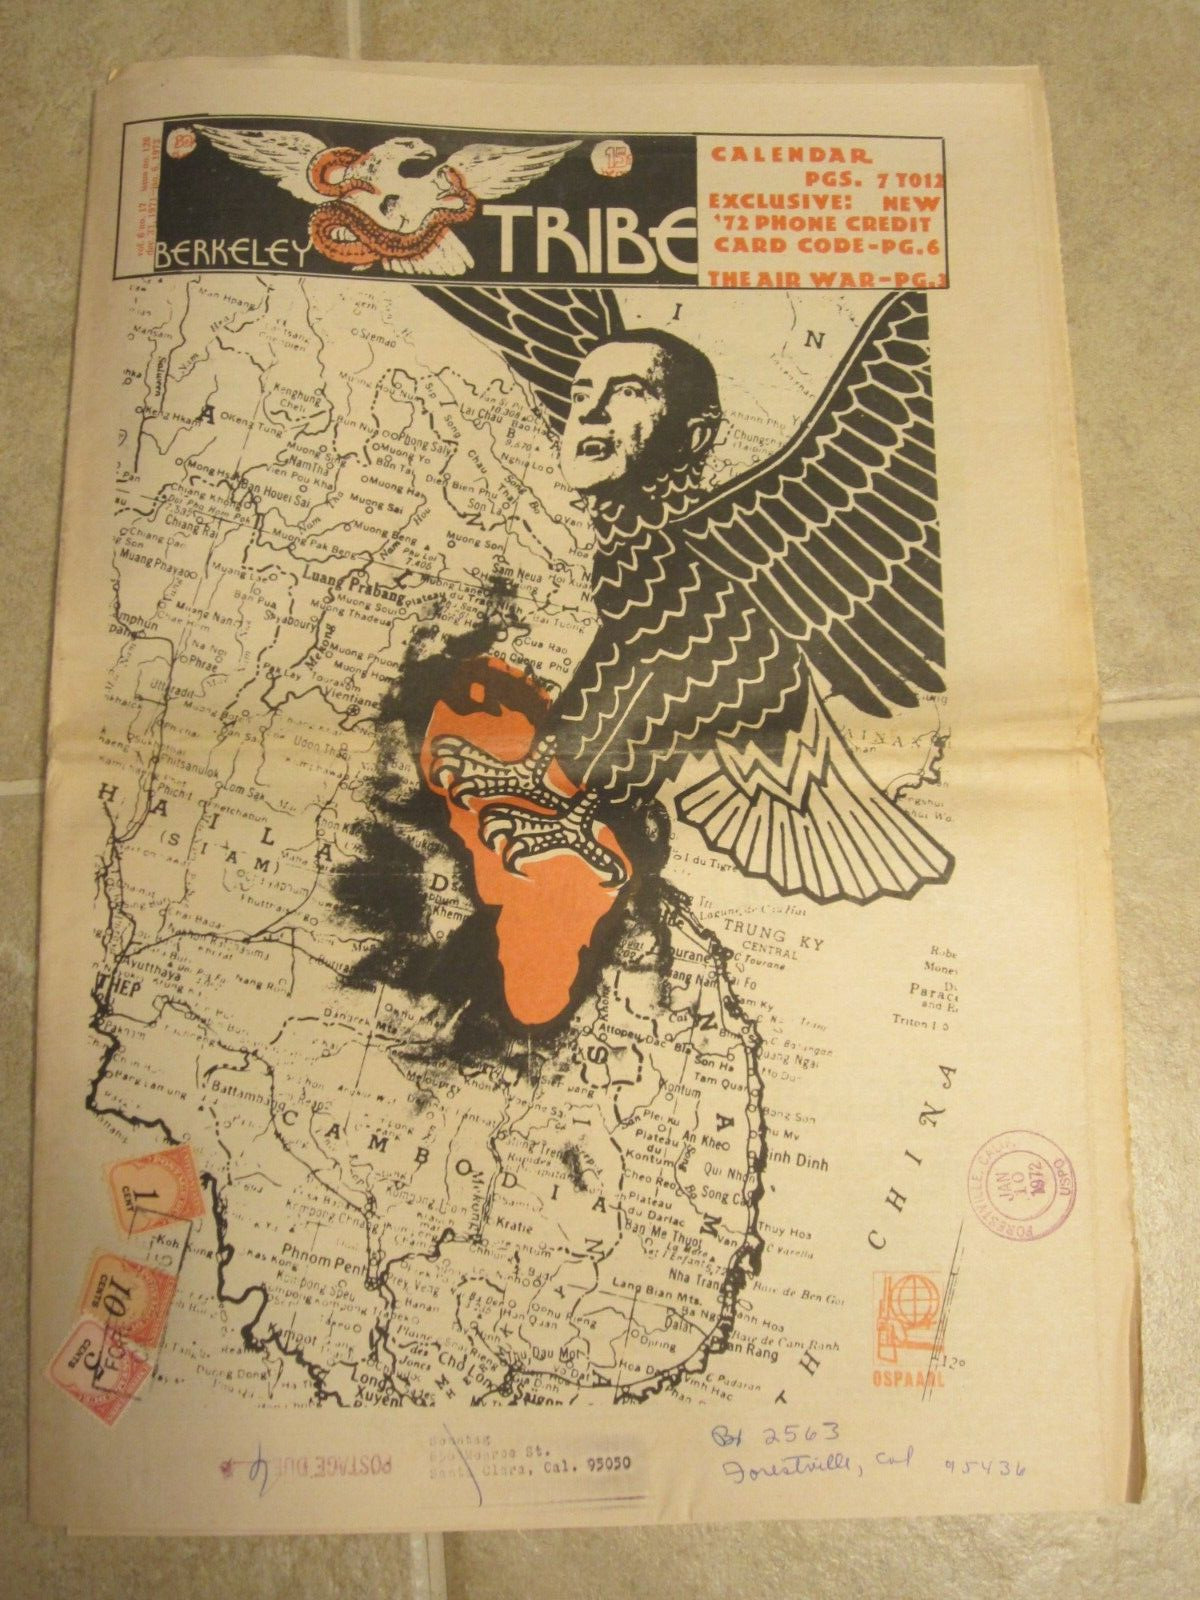 Berkeley Tribe Newspaper December 1971 Vietnam Cambodia Laos My Lai Massacre